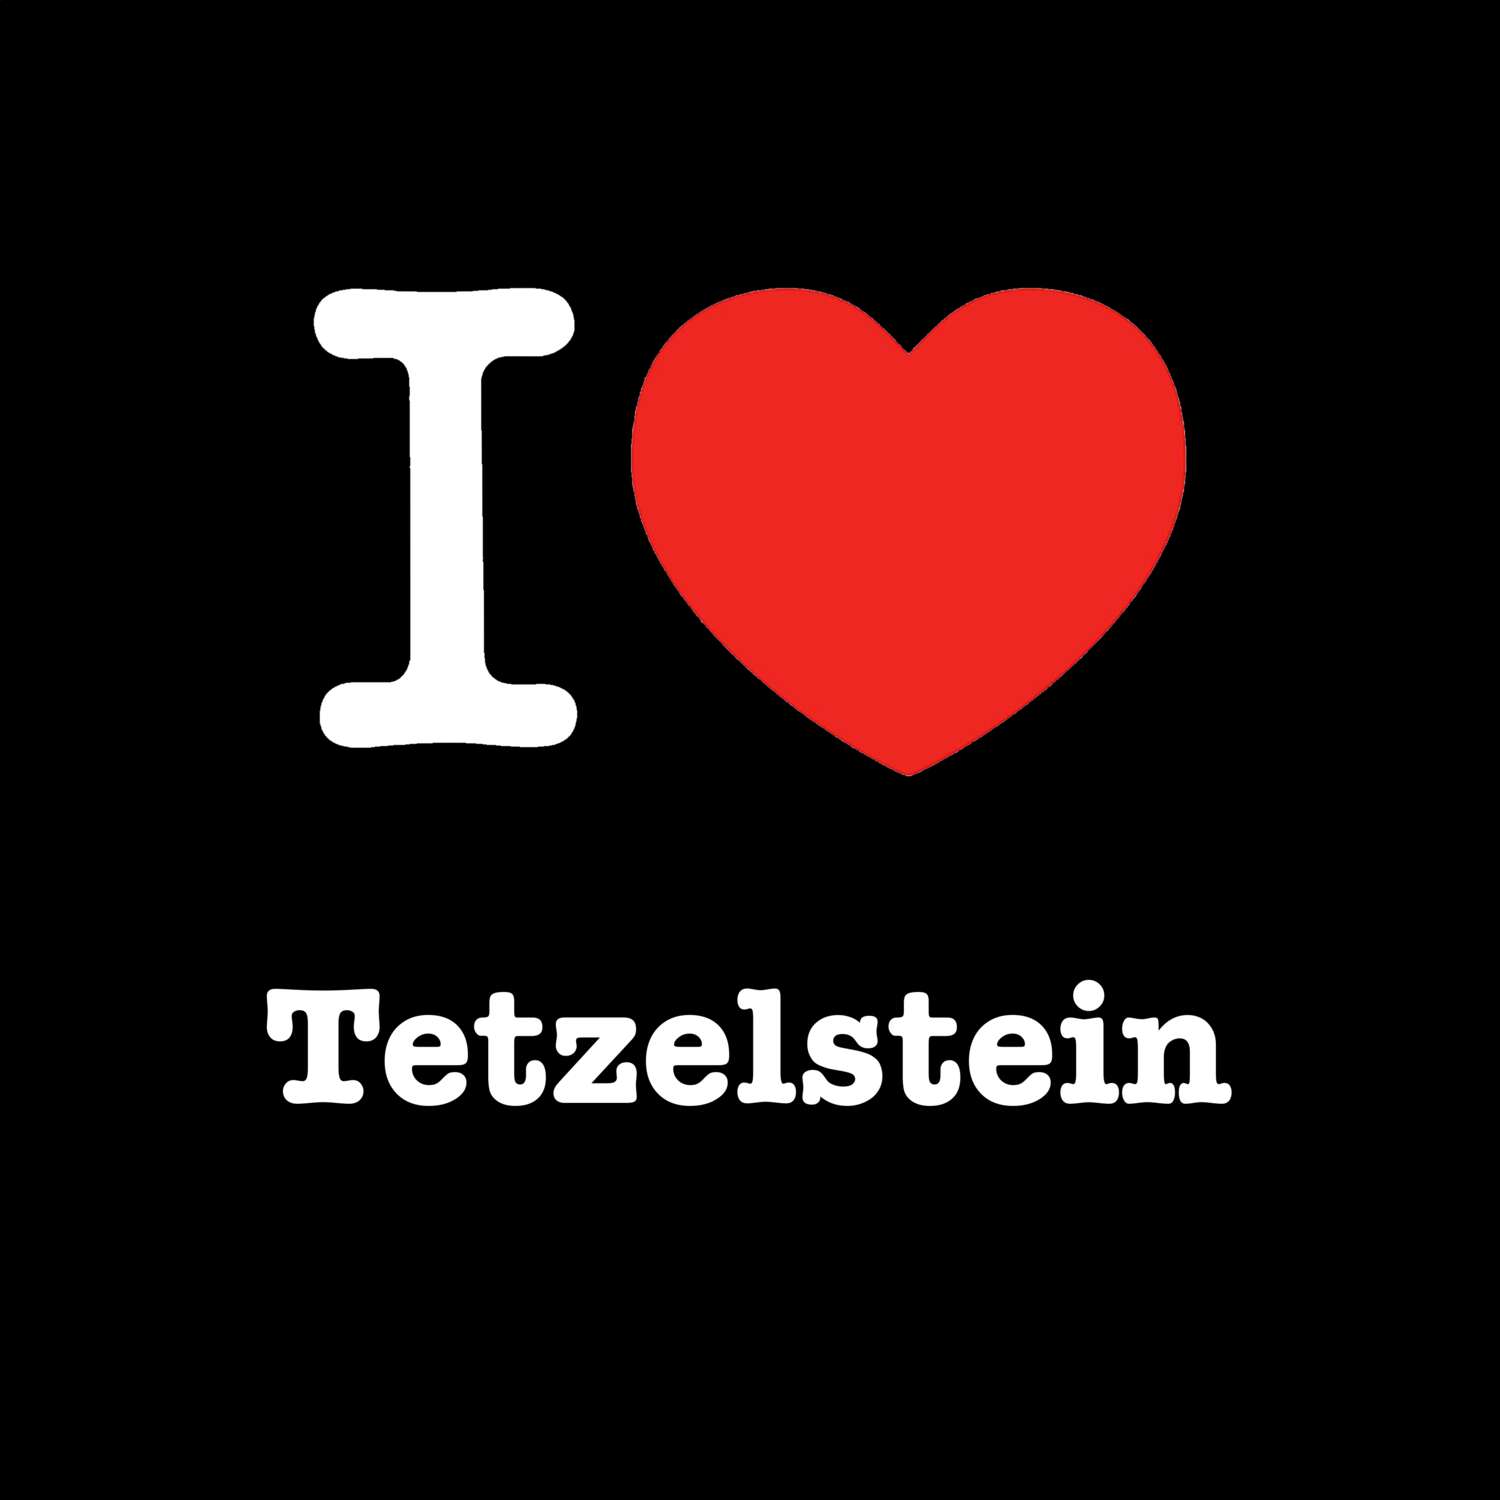 Tetzelstein T-Shirt »I love«